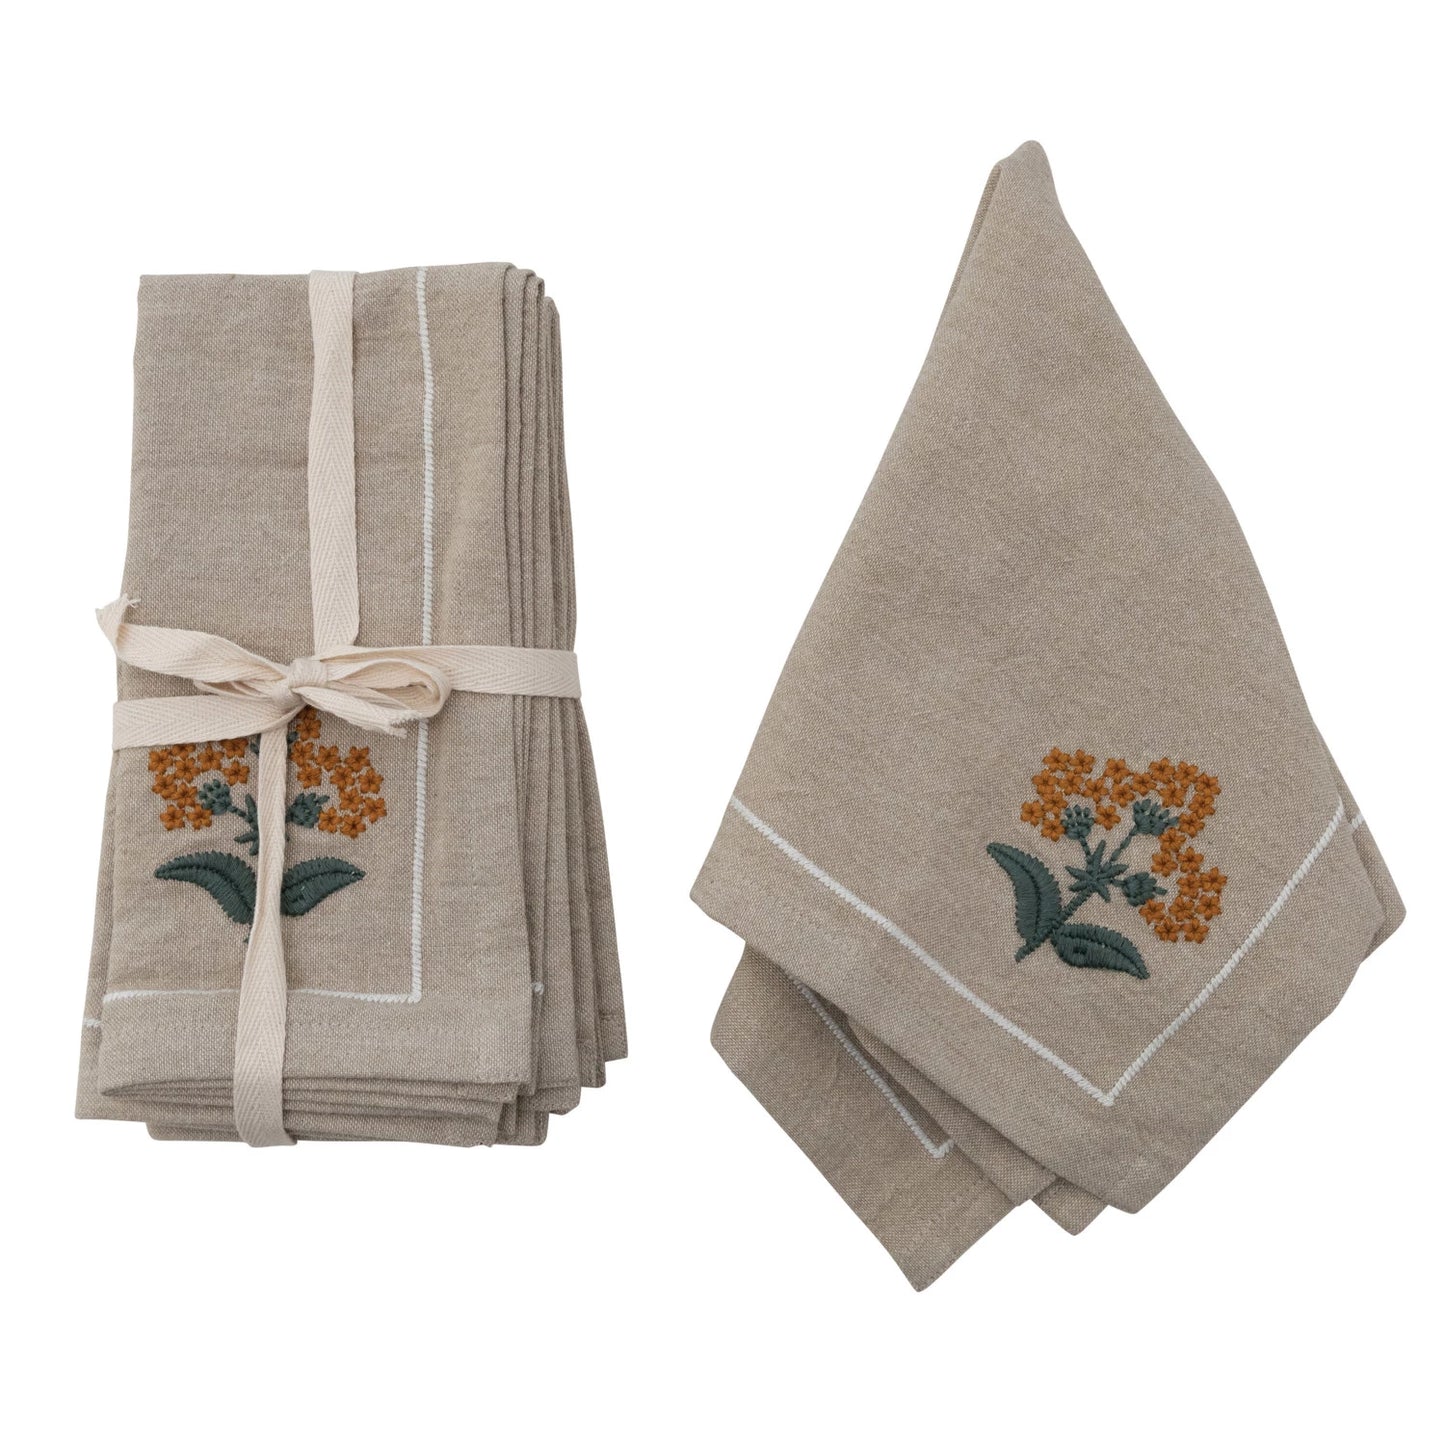 Cotton Napkin Set - Floral Embroidery